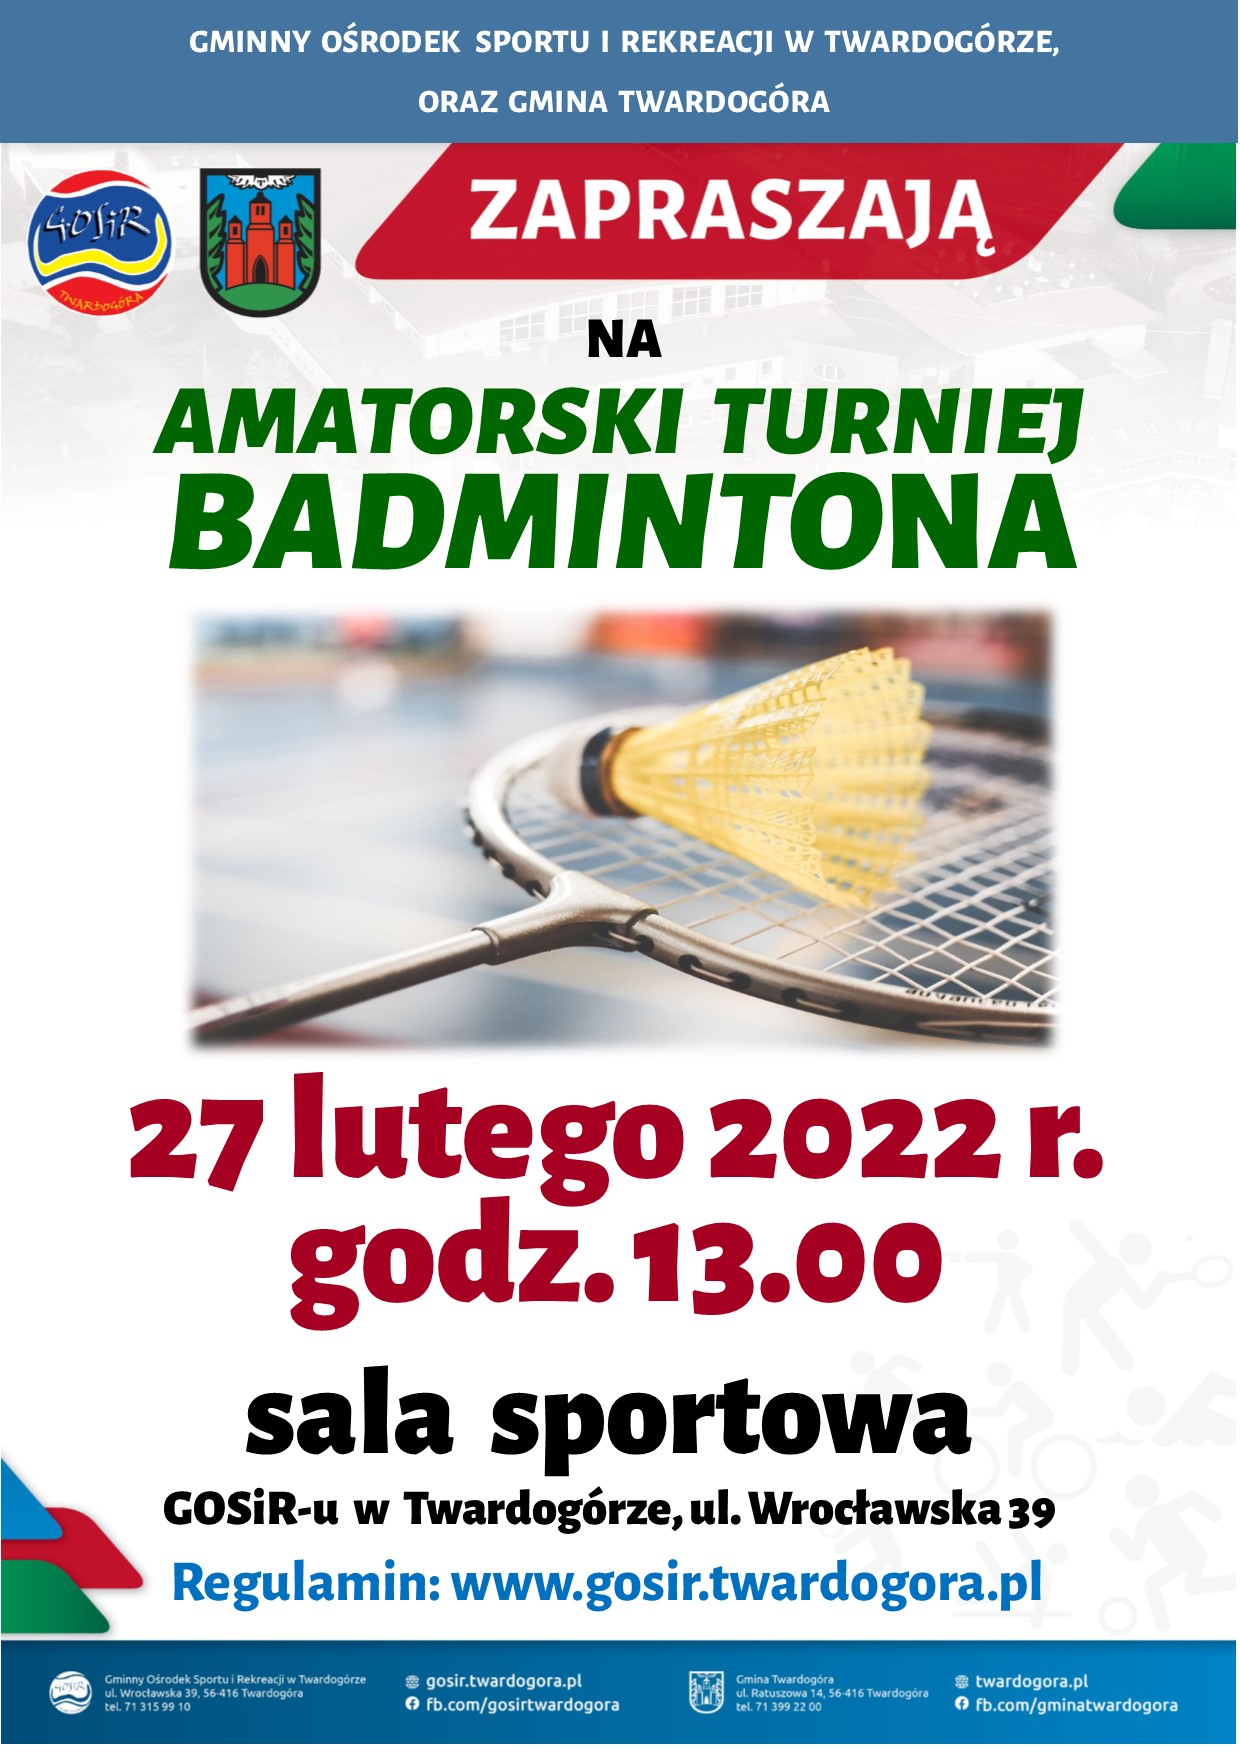 Amatorski Turniej Badmintona